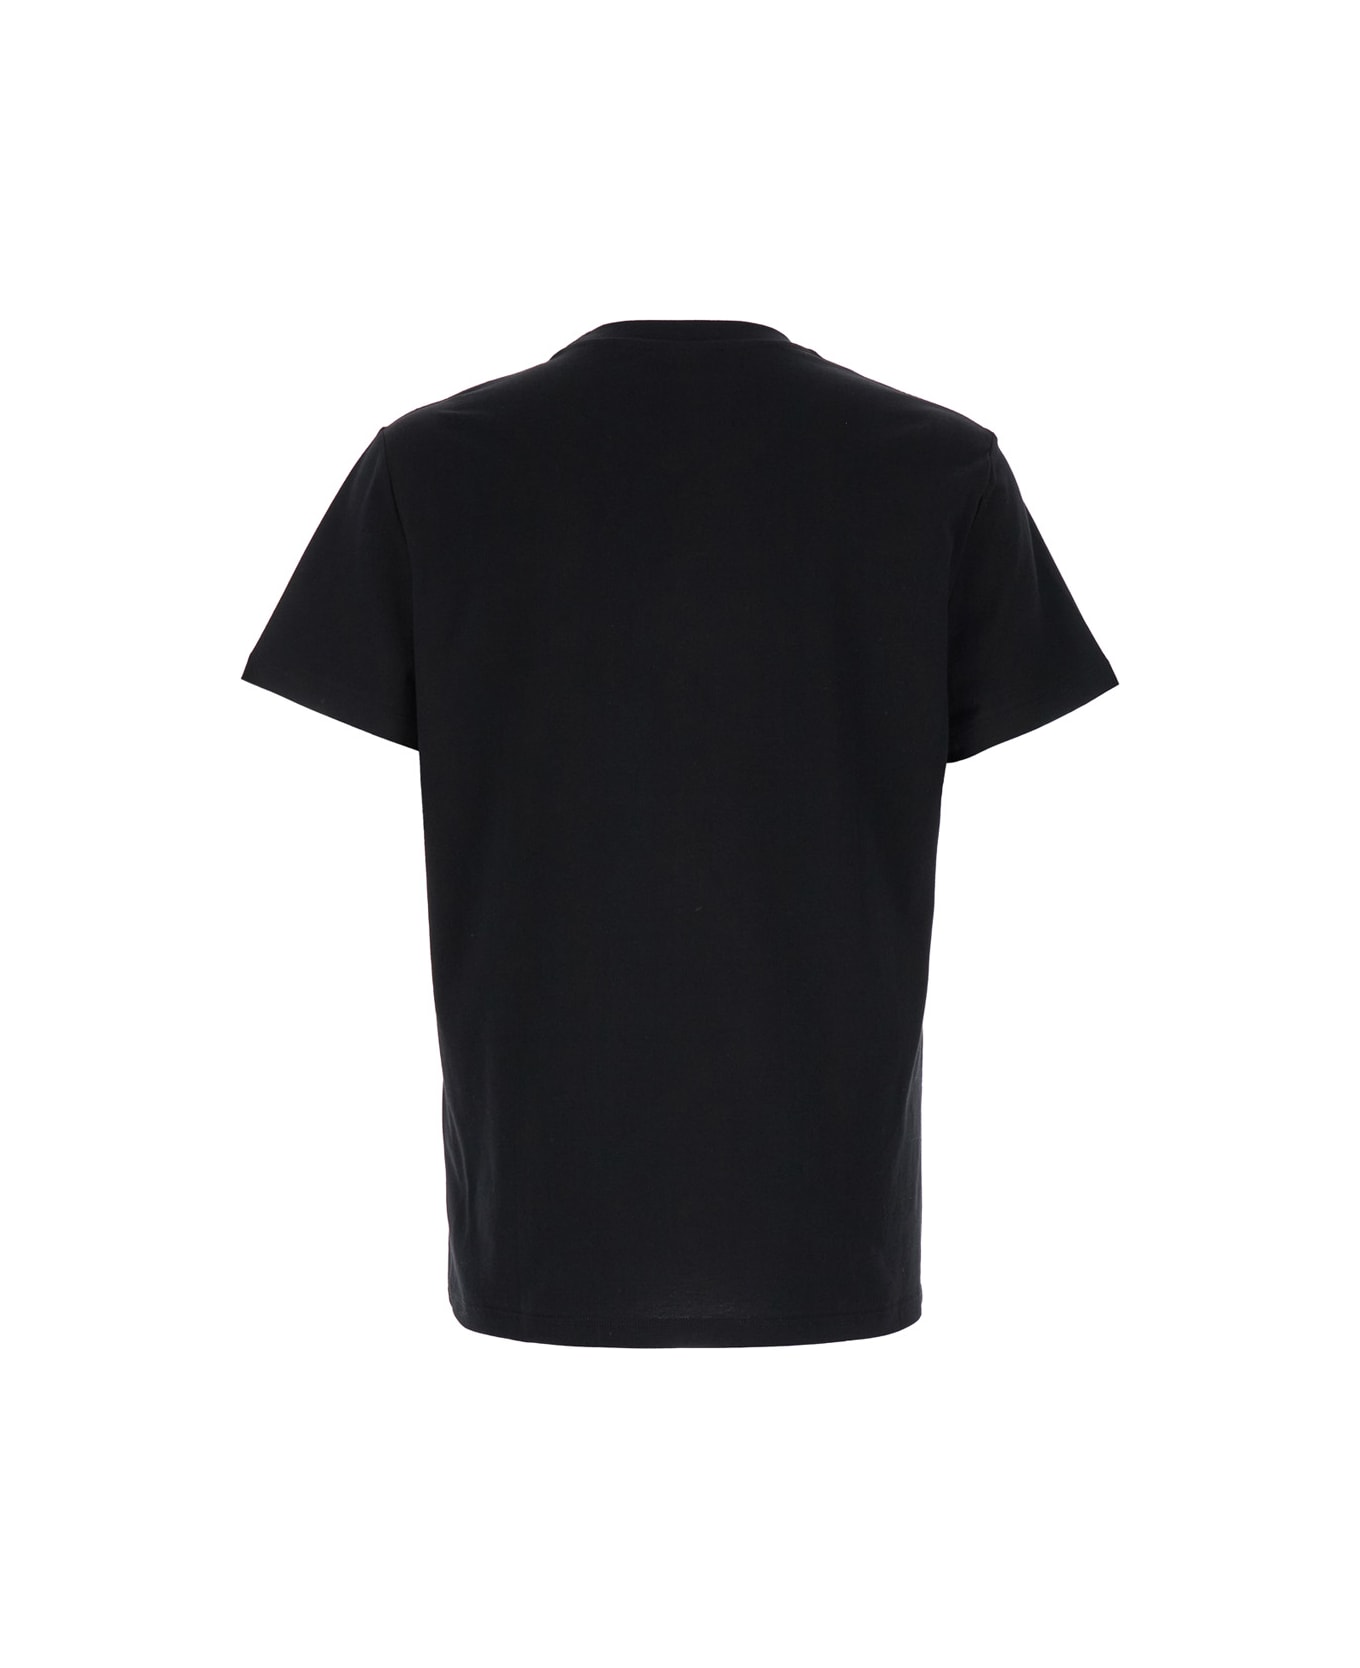 Balmain Silver Balmain Vintage T-shirt - Classic Fit - Black シャツ